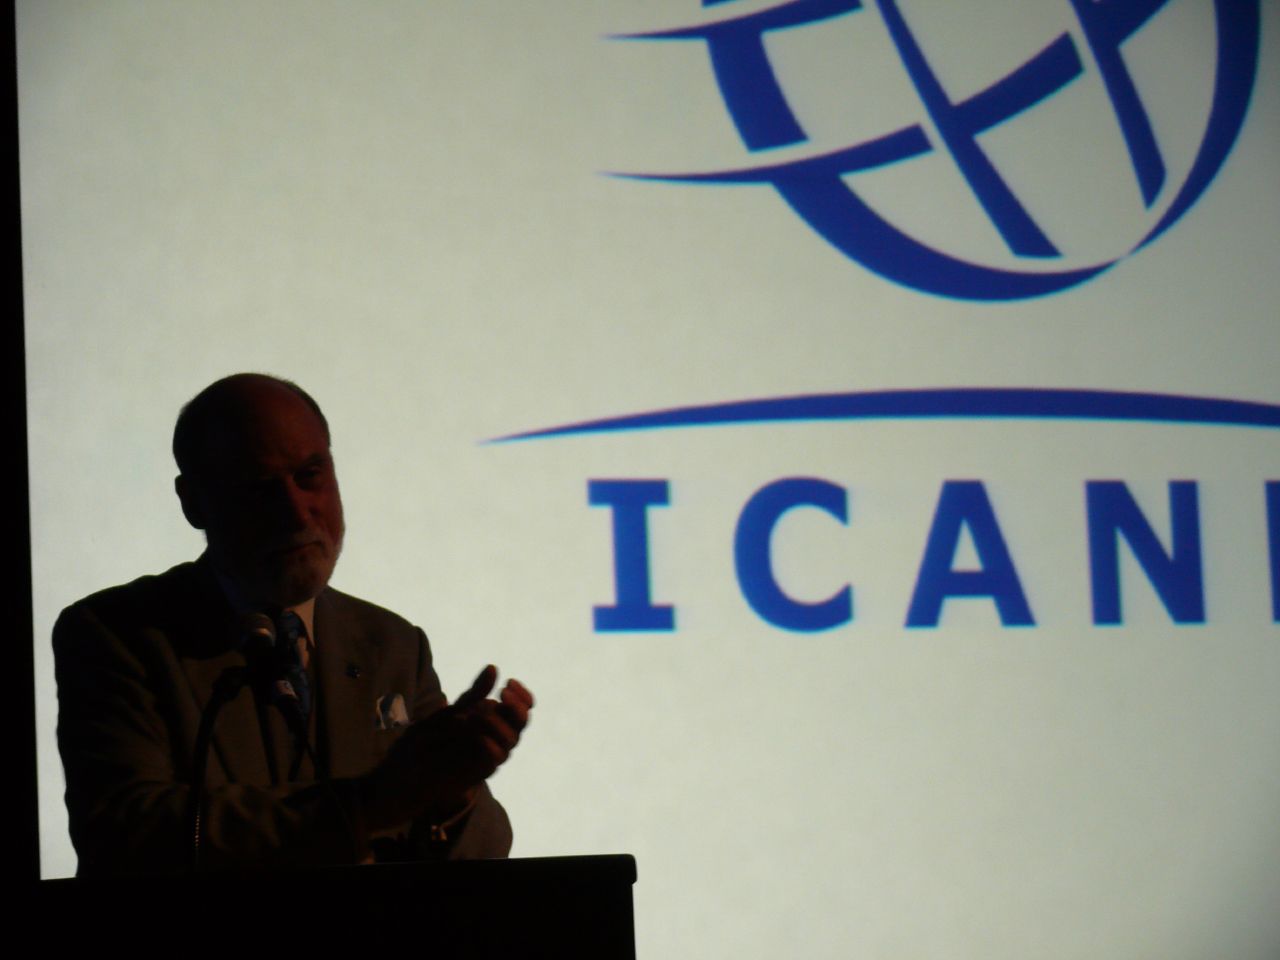 Vint Cerf at ICANN by Veni (CC BY 2.0) https://flic.kr/p/3KWko9